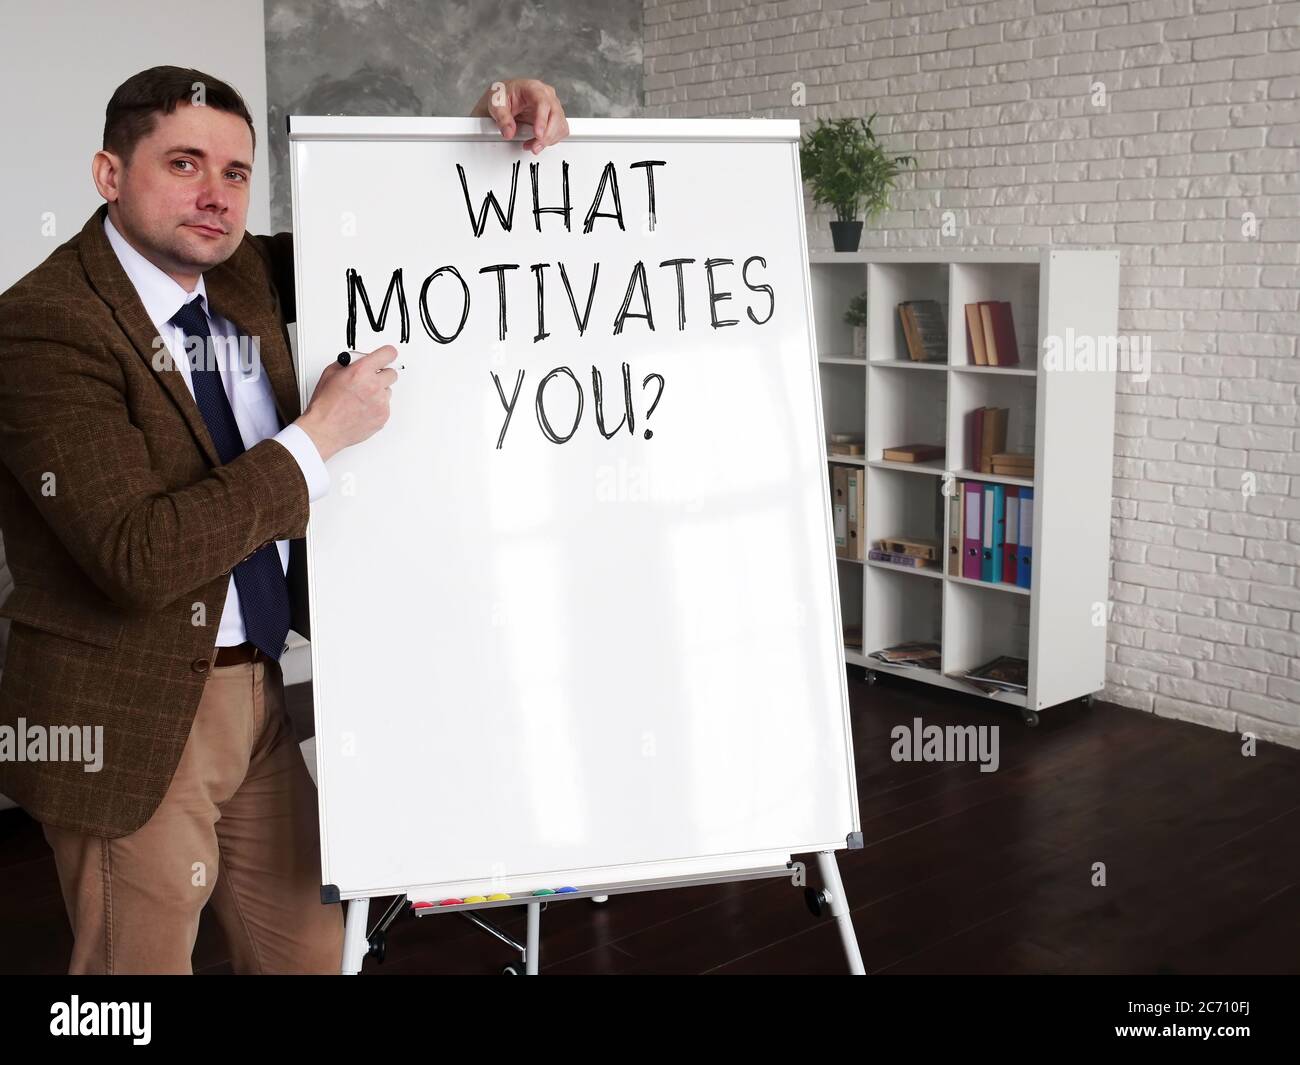 Mentor asks What motivates you. Career development concept. Stock Photo